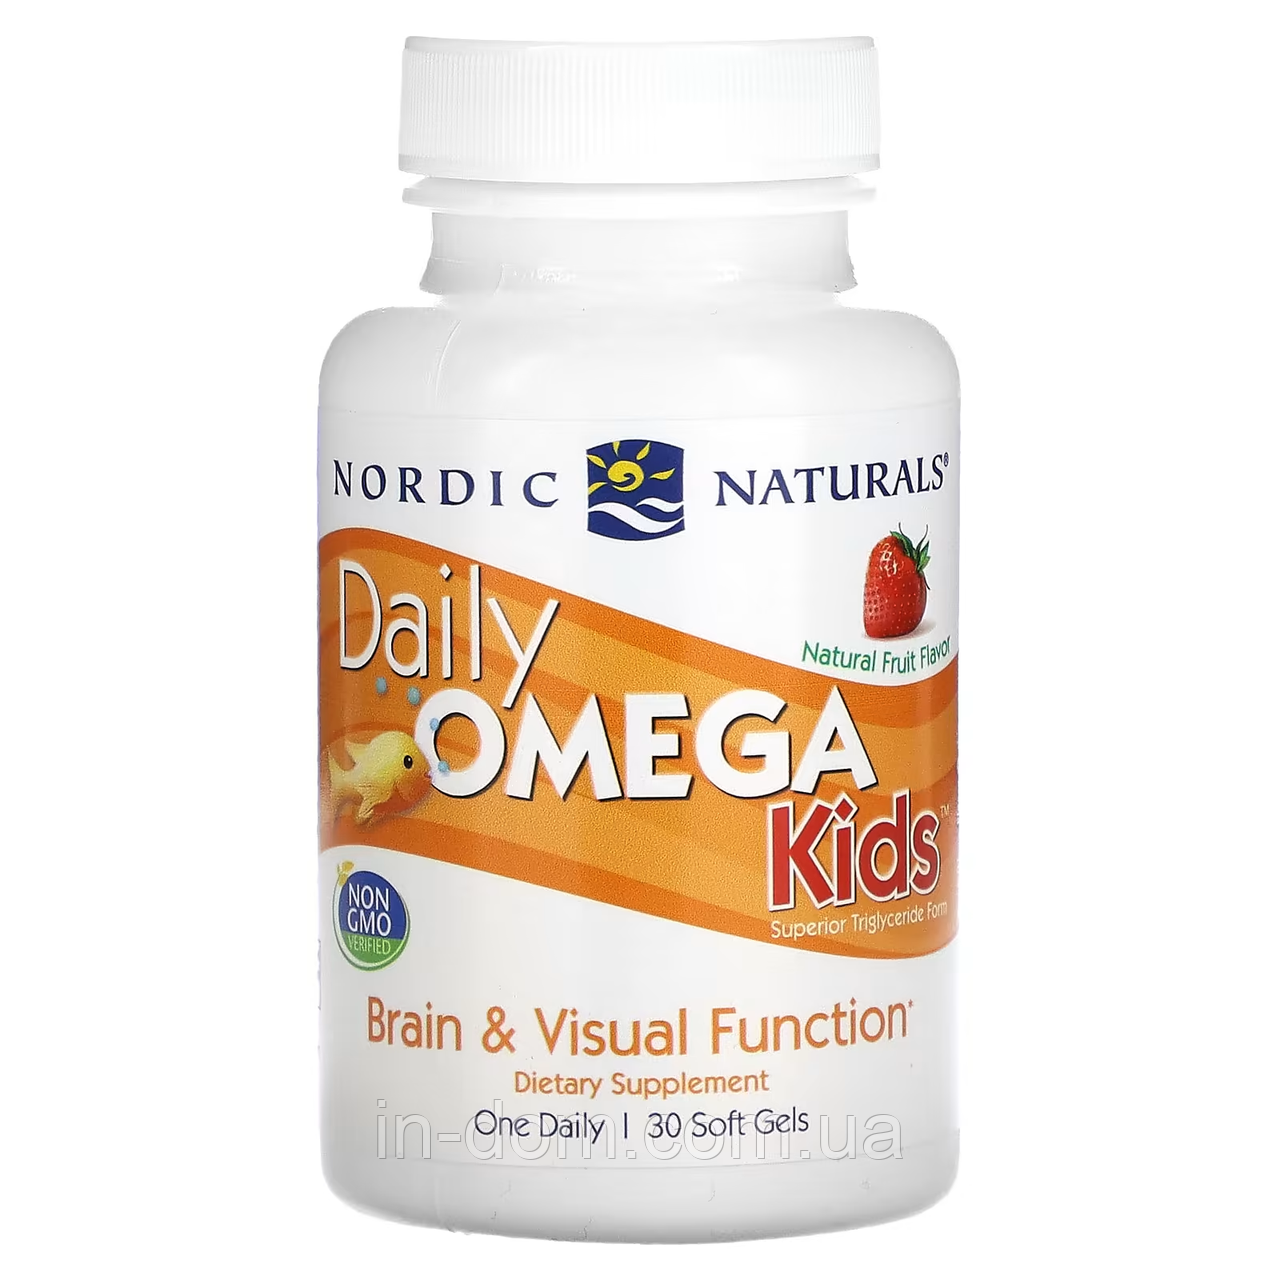 Nordic Naturals Daily Omega kids Омега для дітей, зі смаком натуральних фруктів, 340 мг, 30 капсул